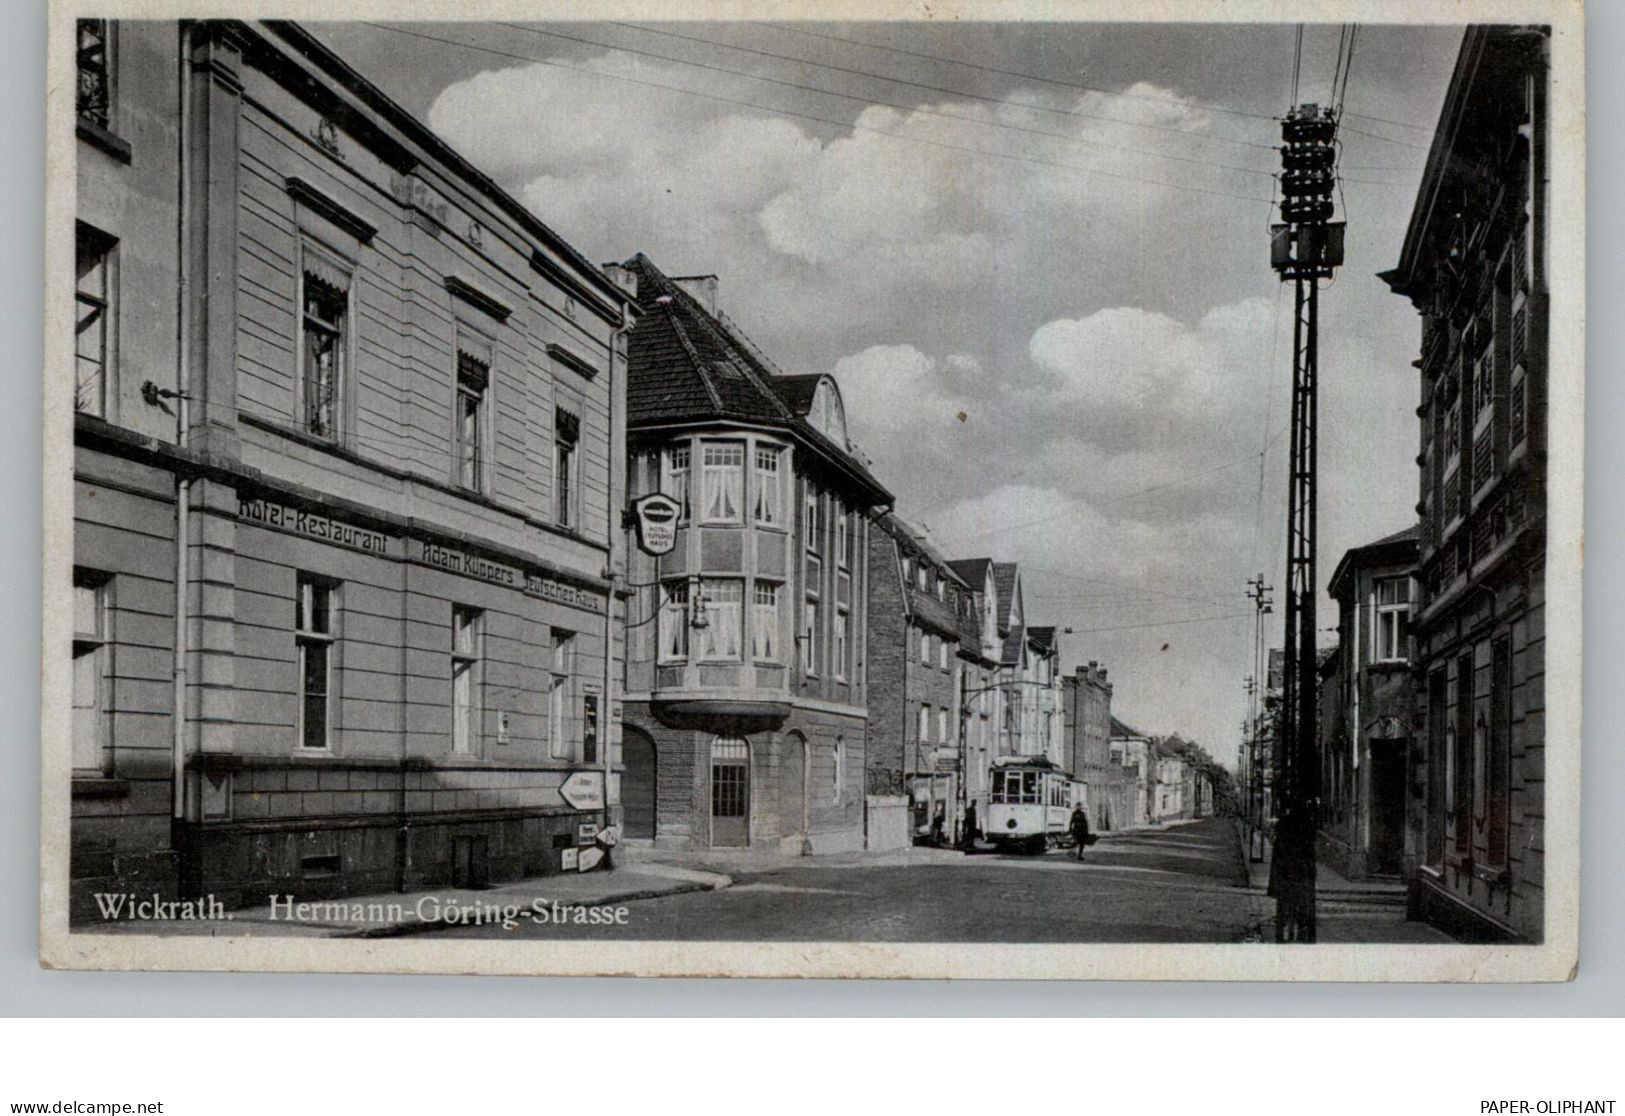 4050 MÖNCHENGLADBACH - WICKRATH, Hermann - Göring - Strasse, Hotel Küppers, Strassenbahn, 1941 - Moenchengladbach